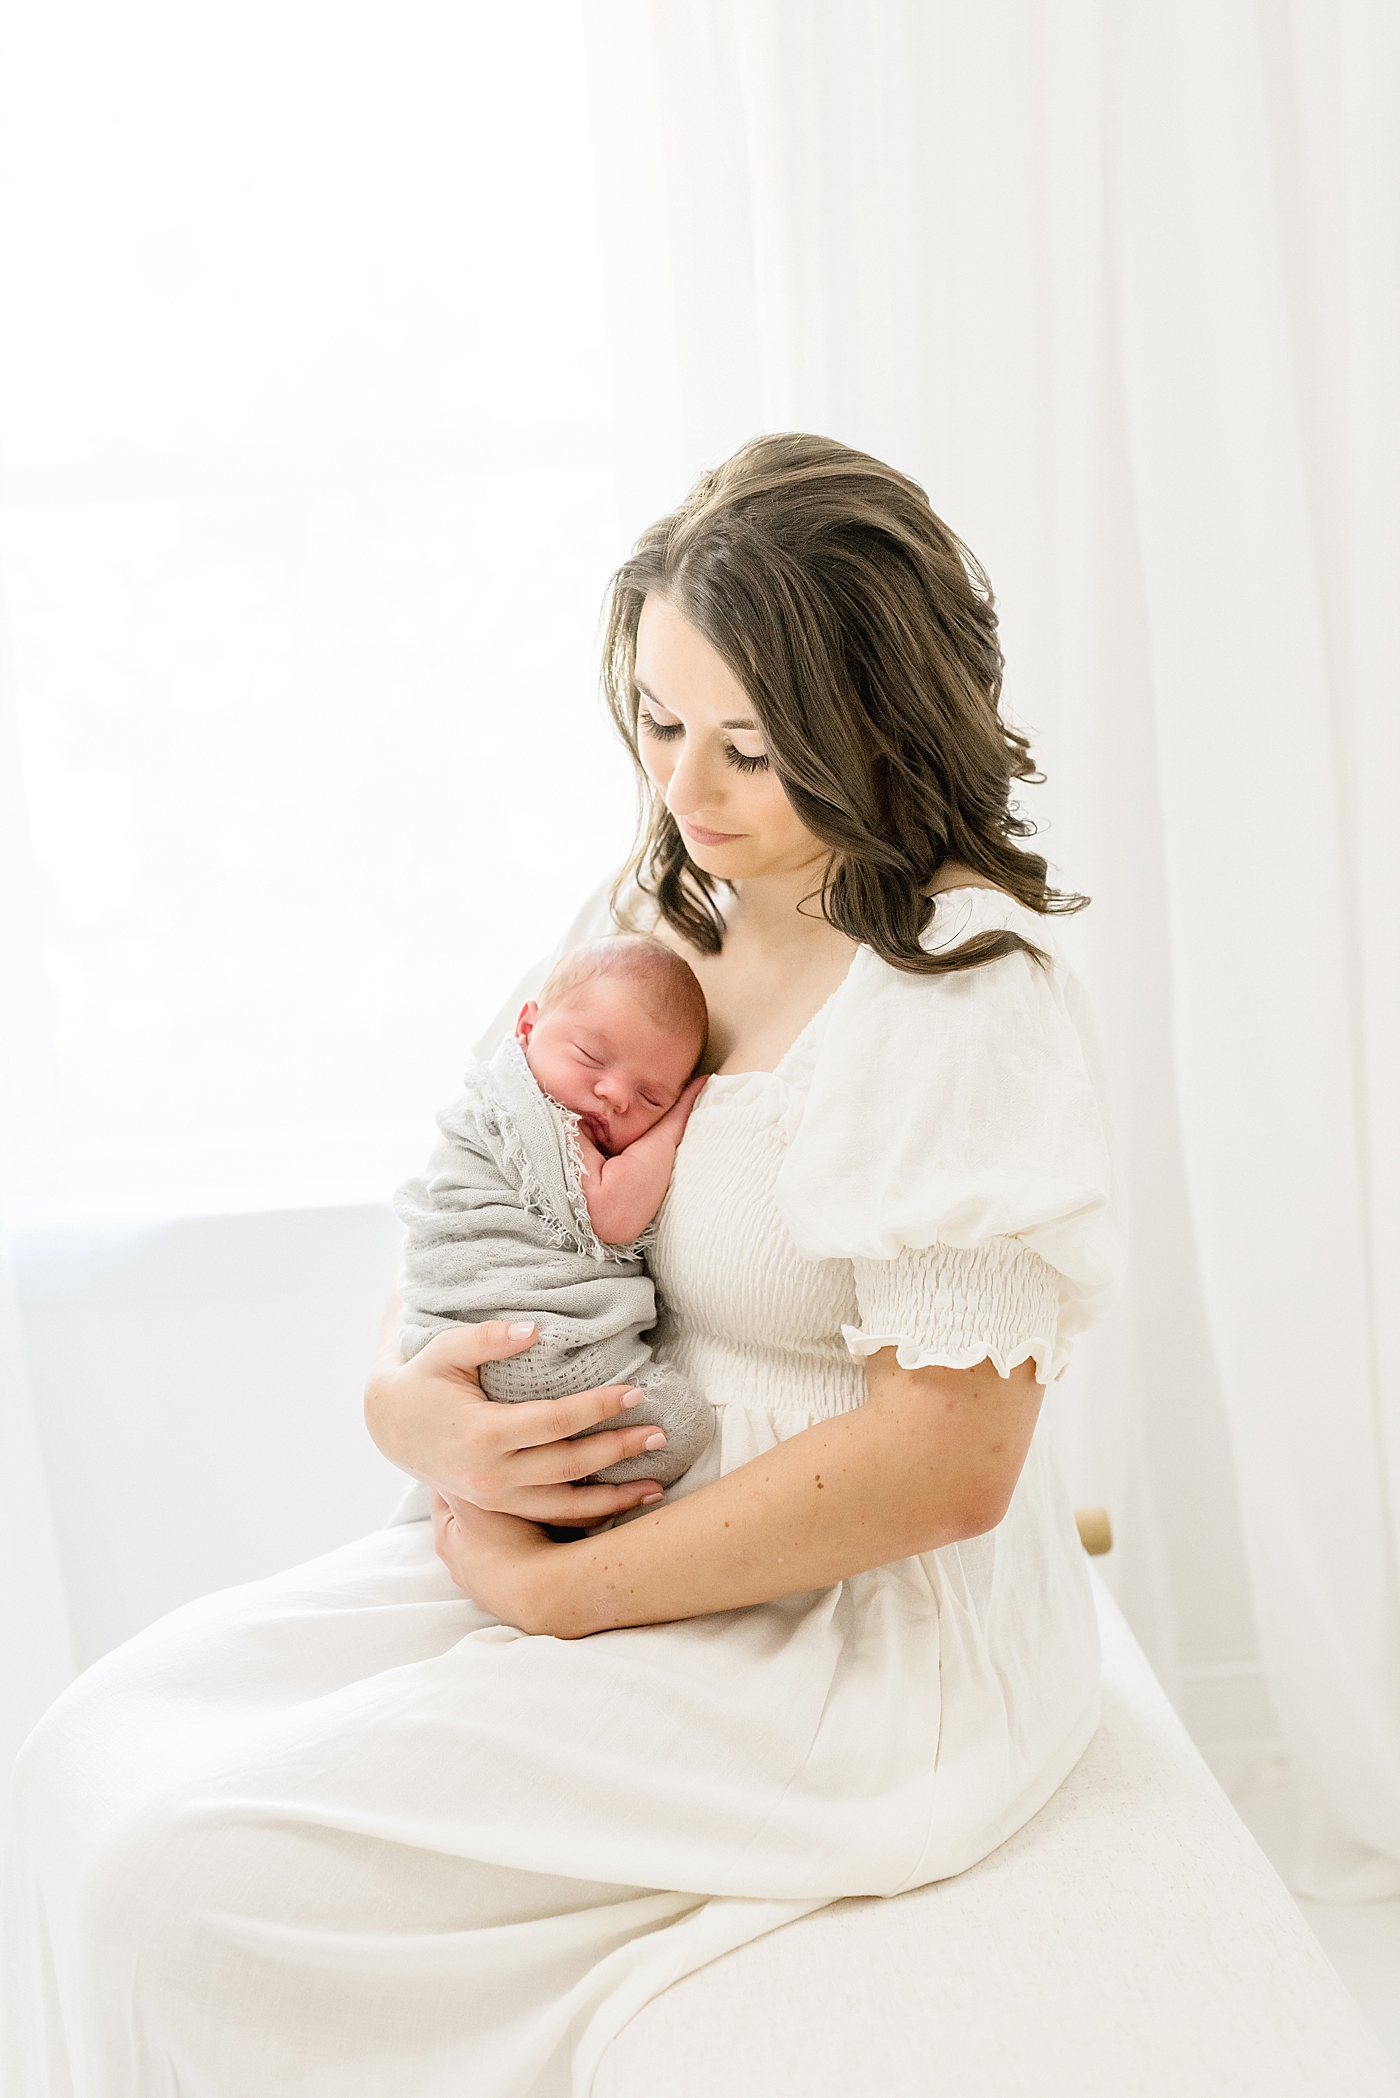 Mom in long white dress holding her newborn | Photo by North Carolina Newborn Photographer Anna Wisjo 